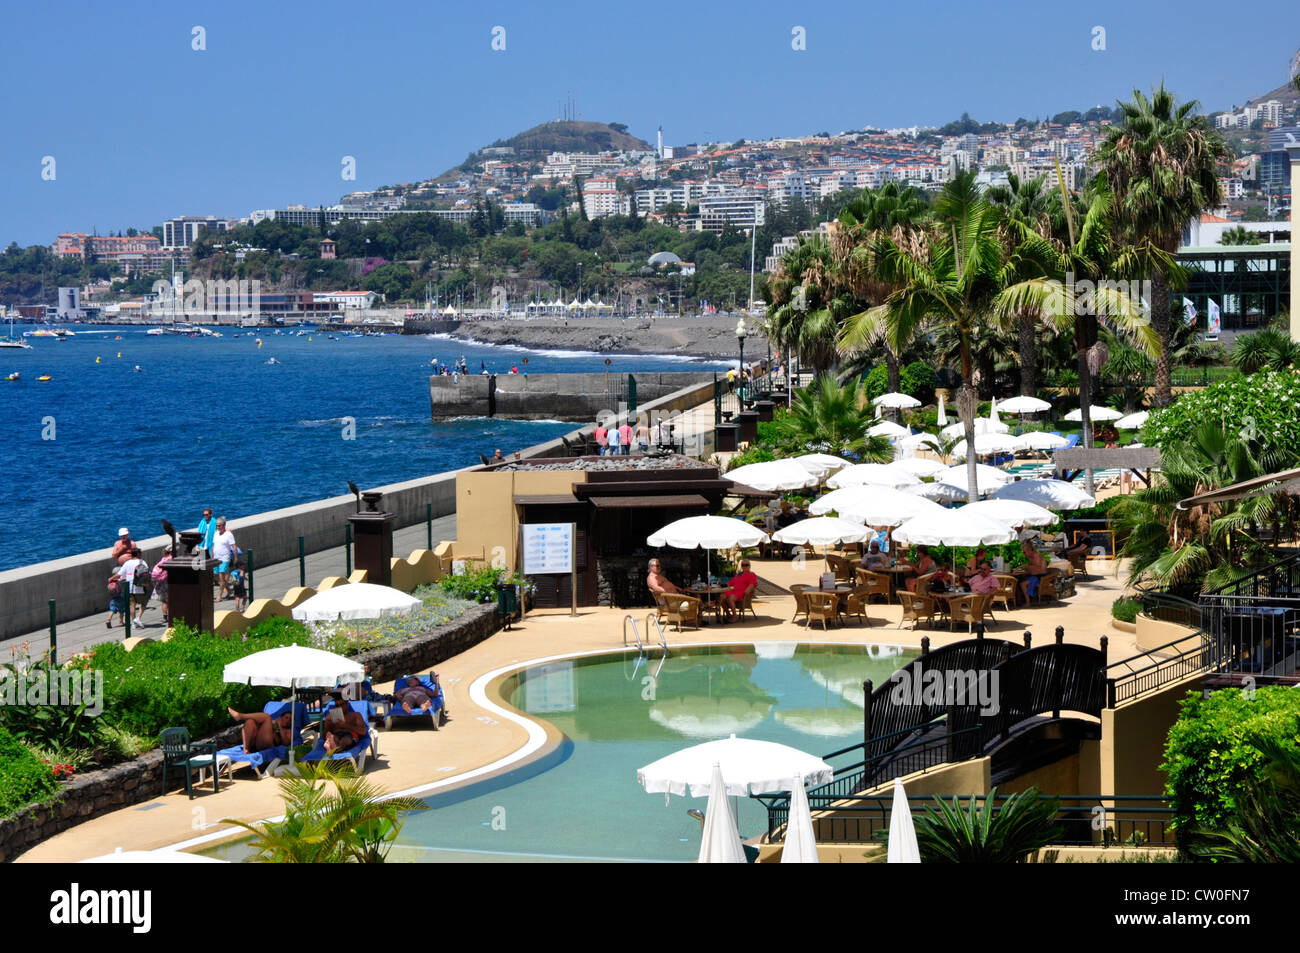 Portugal - Madeira - Funchal - view from the Porto Santa Maria hotel - Zona Velha - over the pool and along the bay Stock Photo